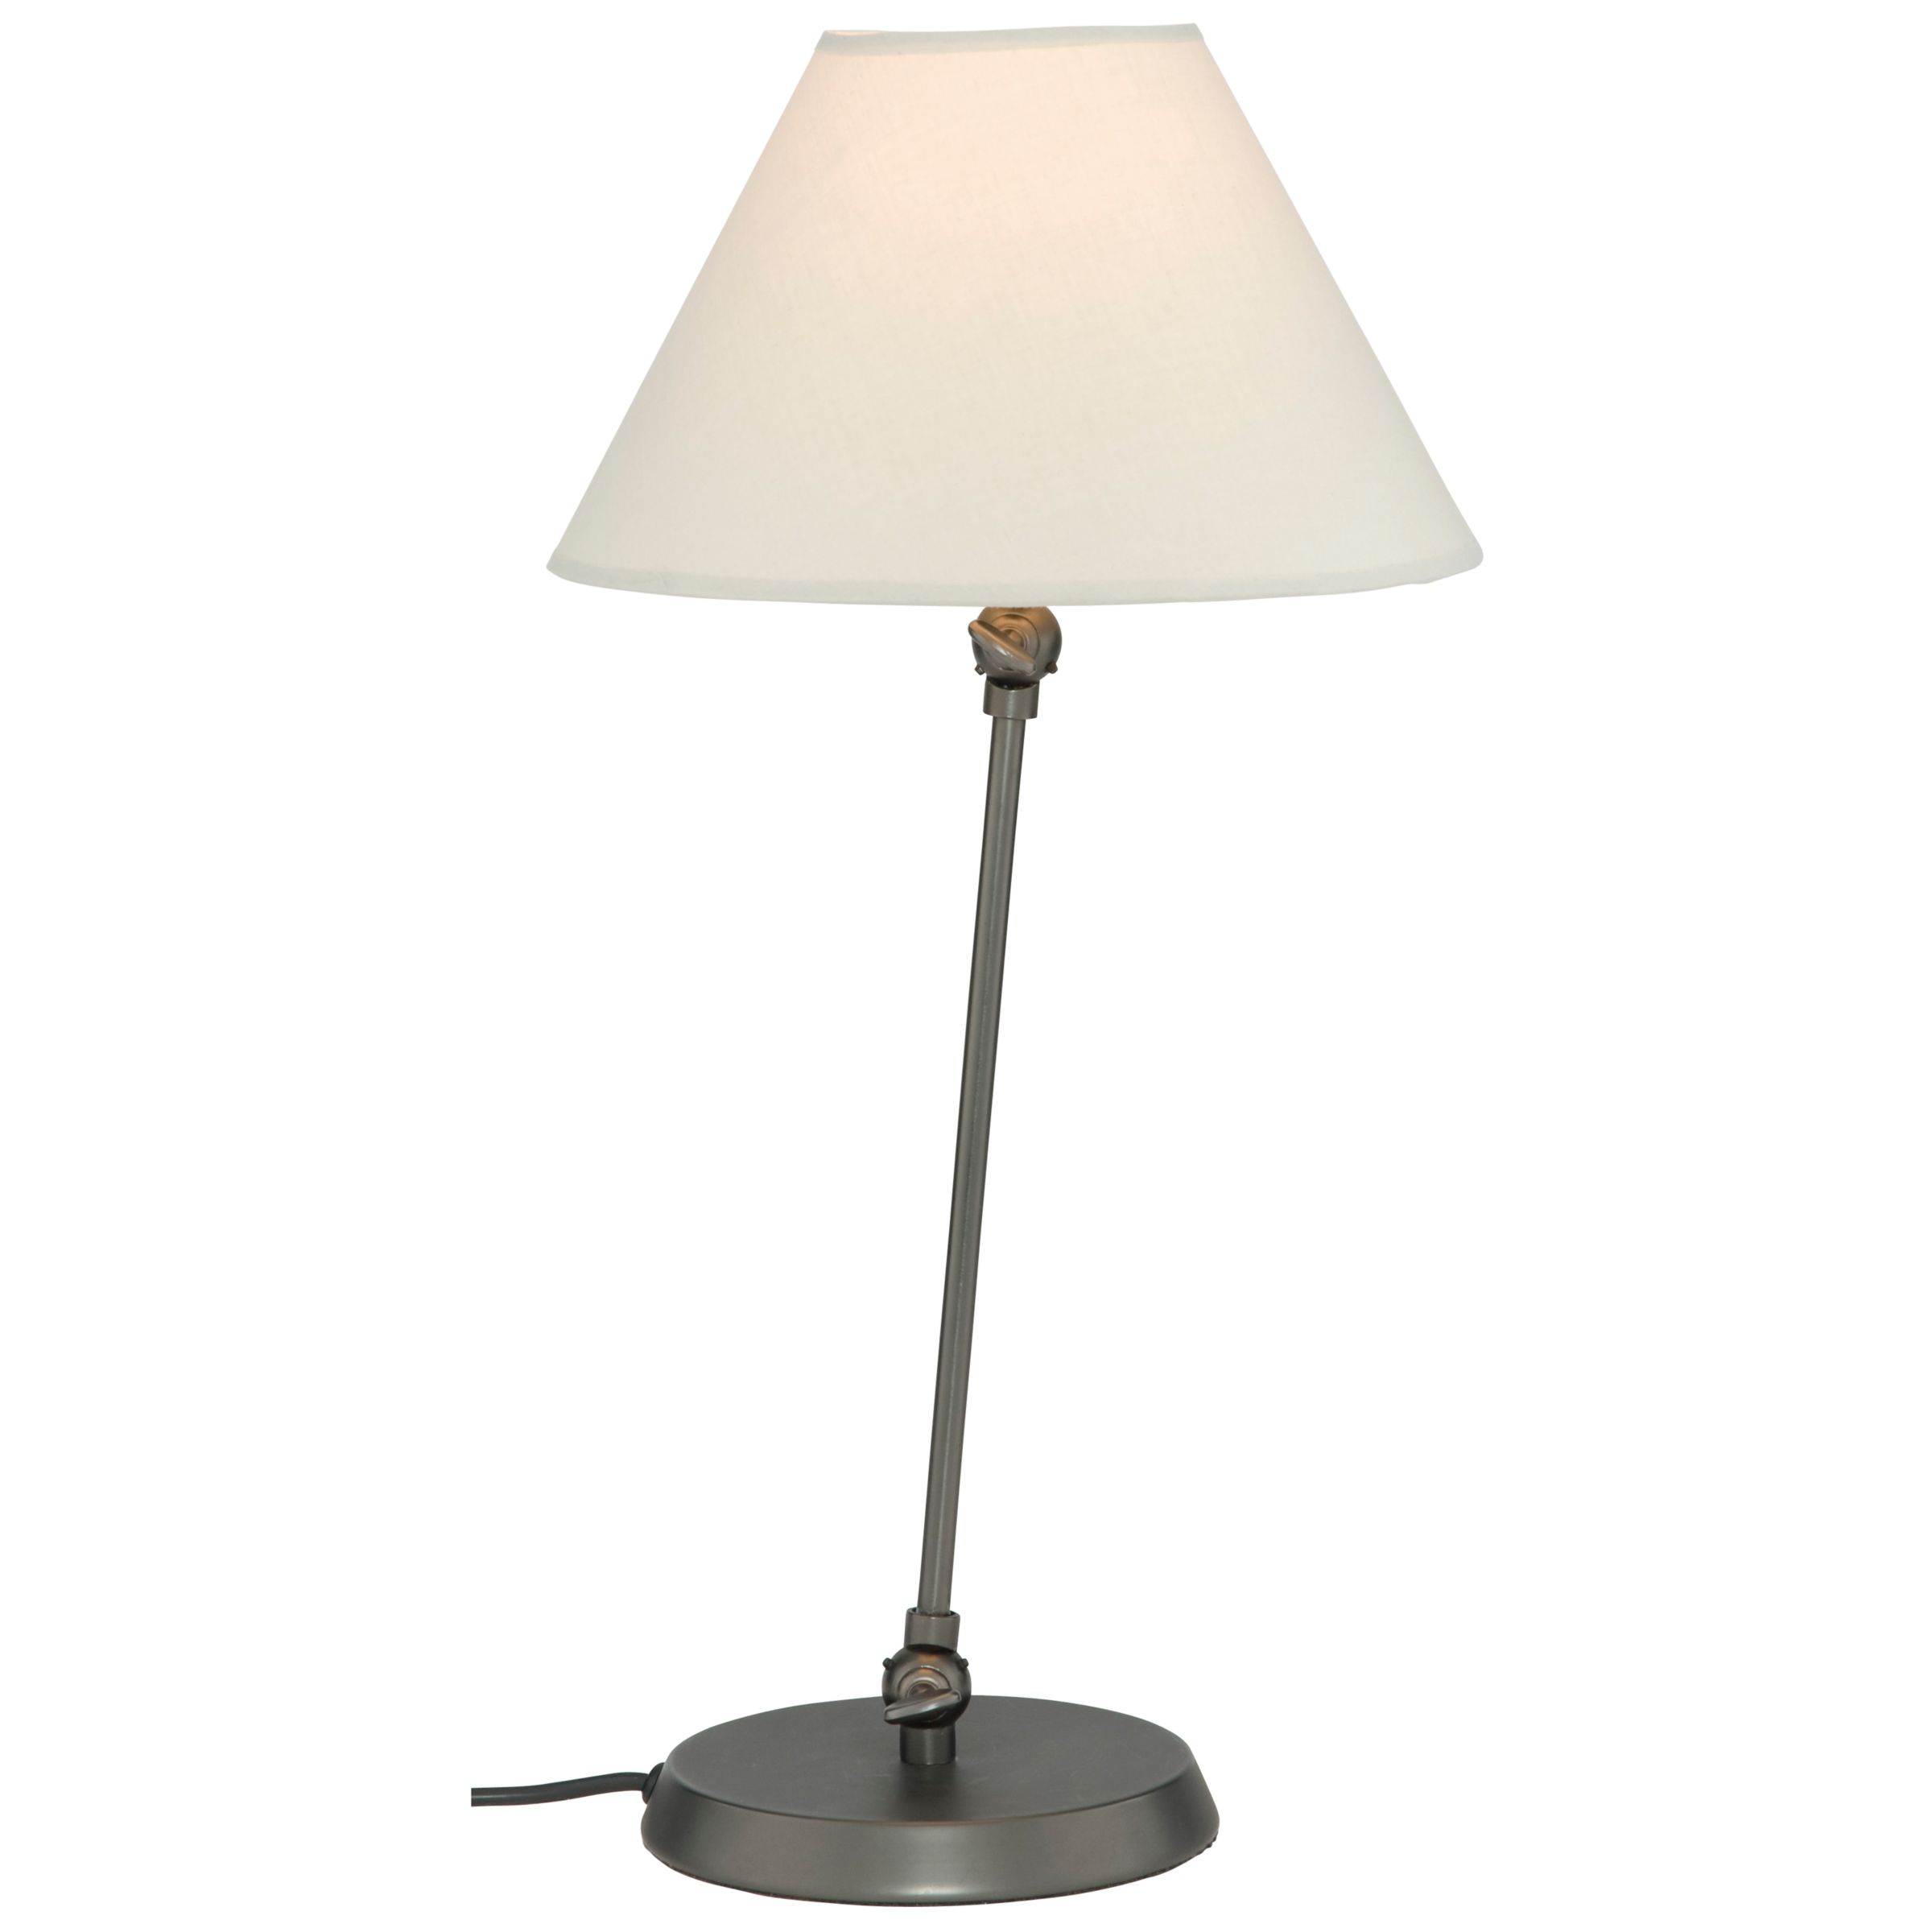 john lewis table lamps reviews